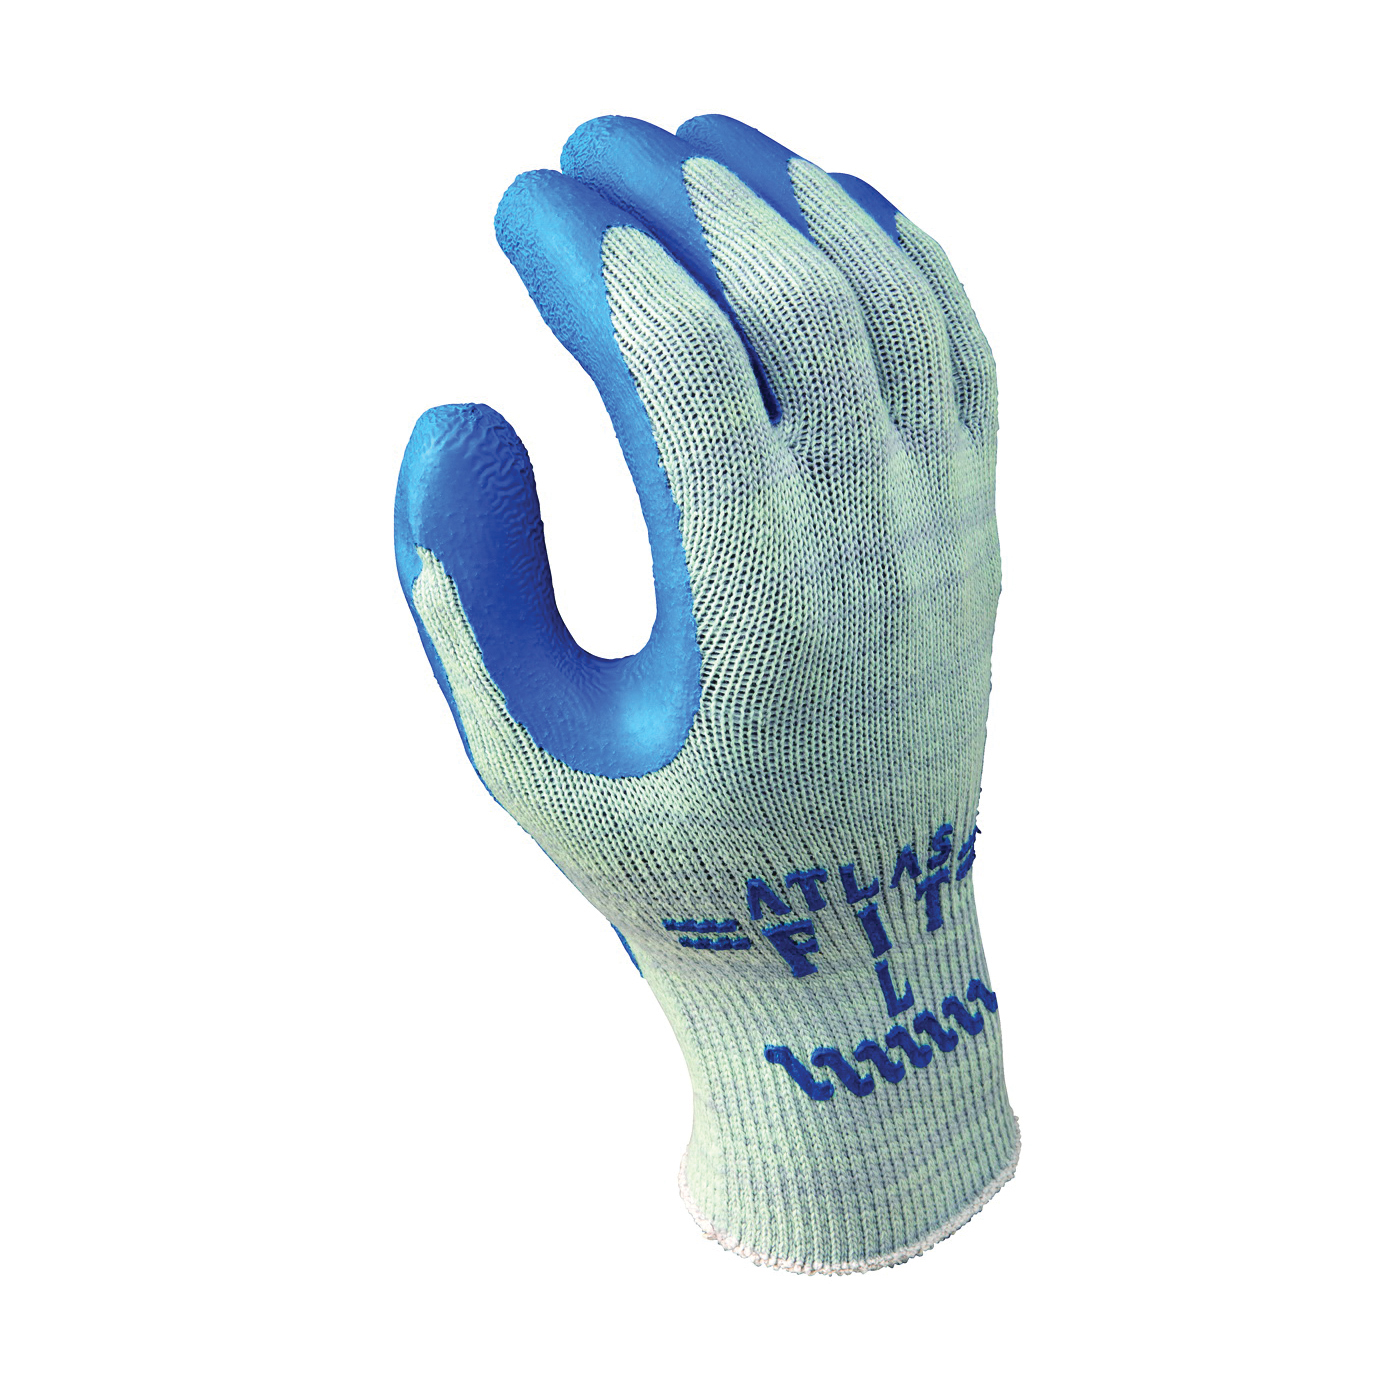 Showa 300M-08.RT Gloves, M, Knit Wrist Cuff, Natural Rubber Coating, Blue/Light Gray - 1